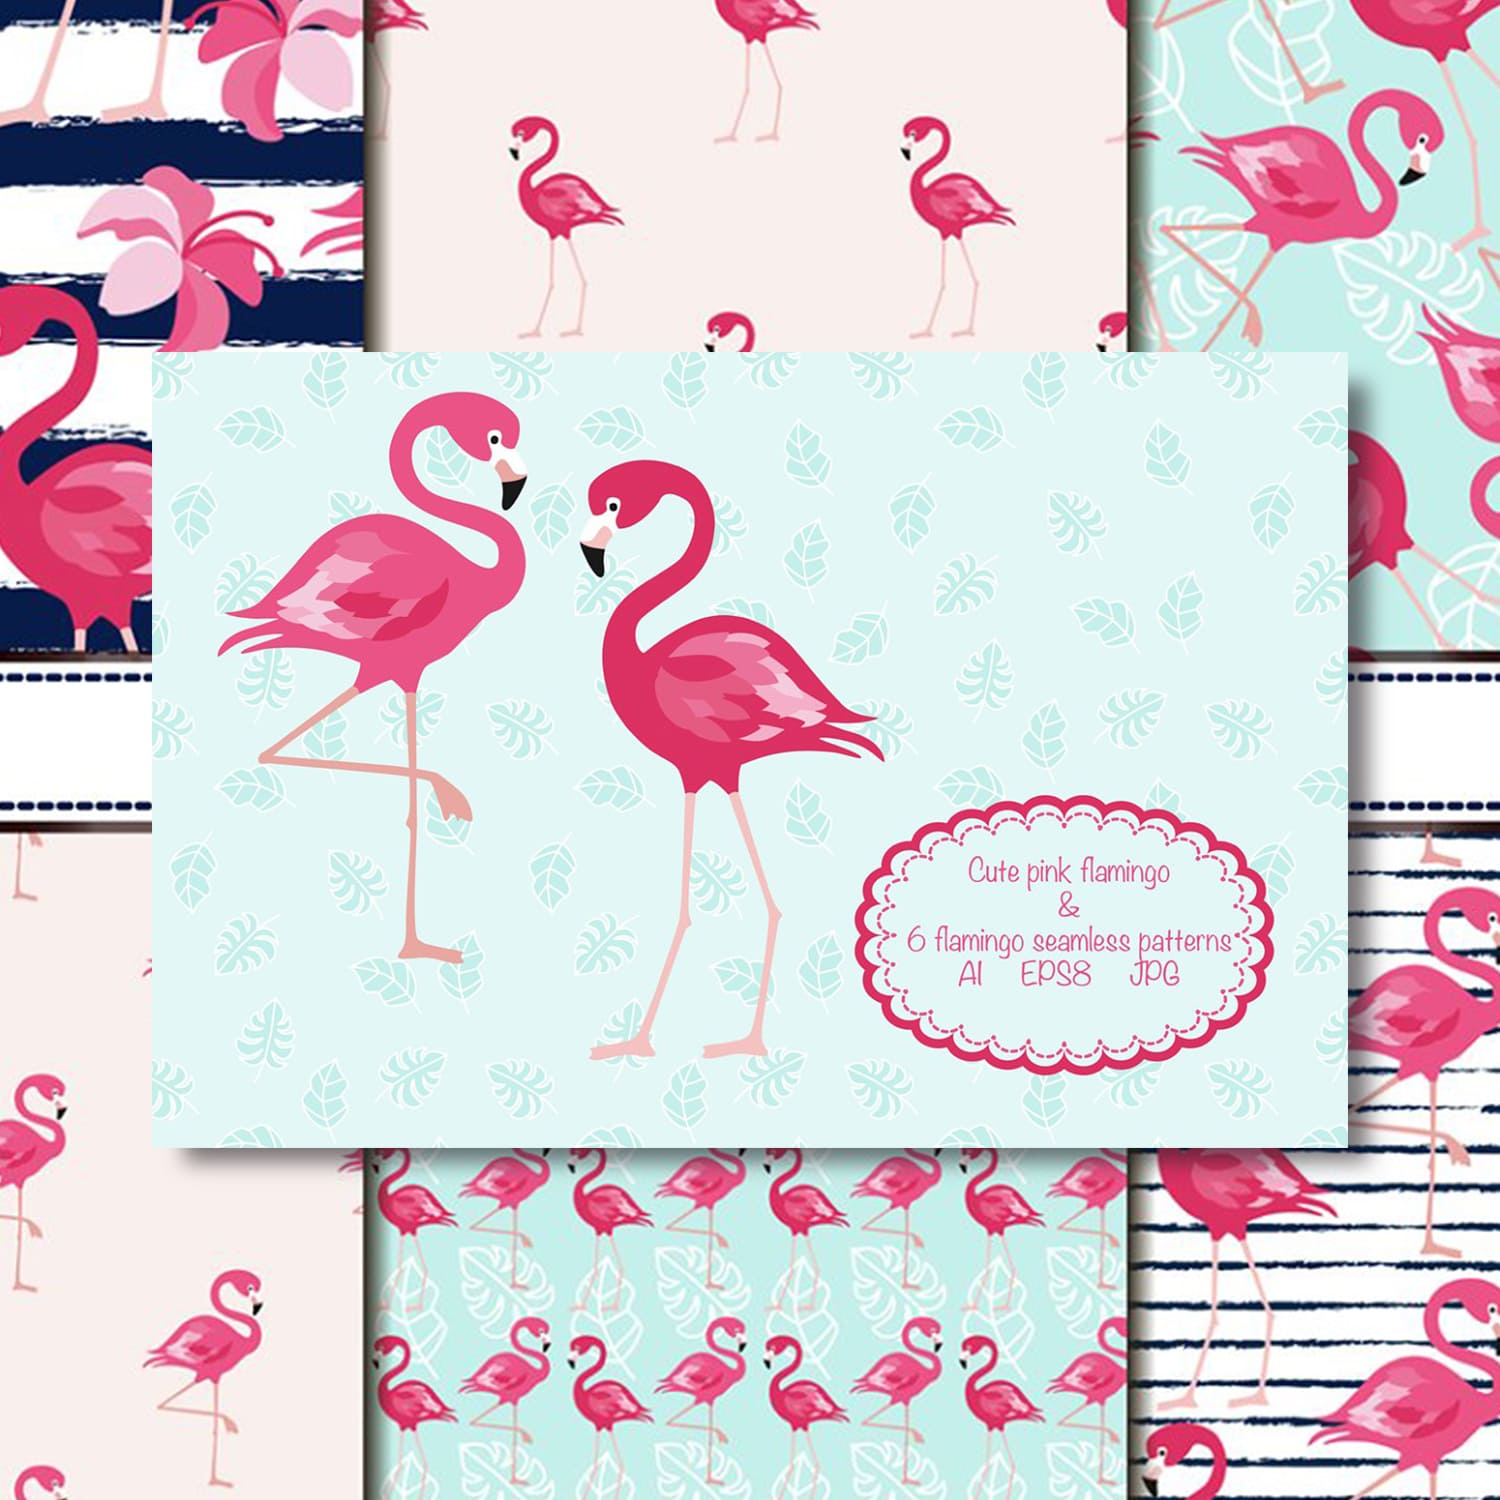 Cute pink flamingo cover.